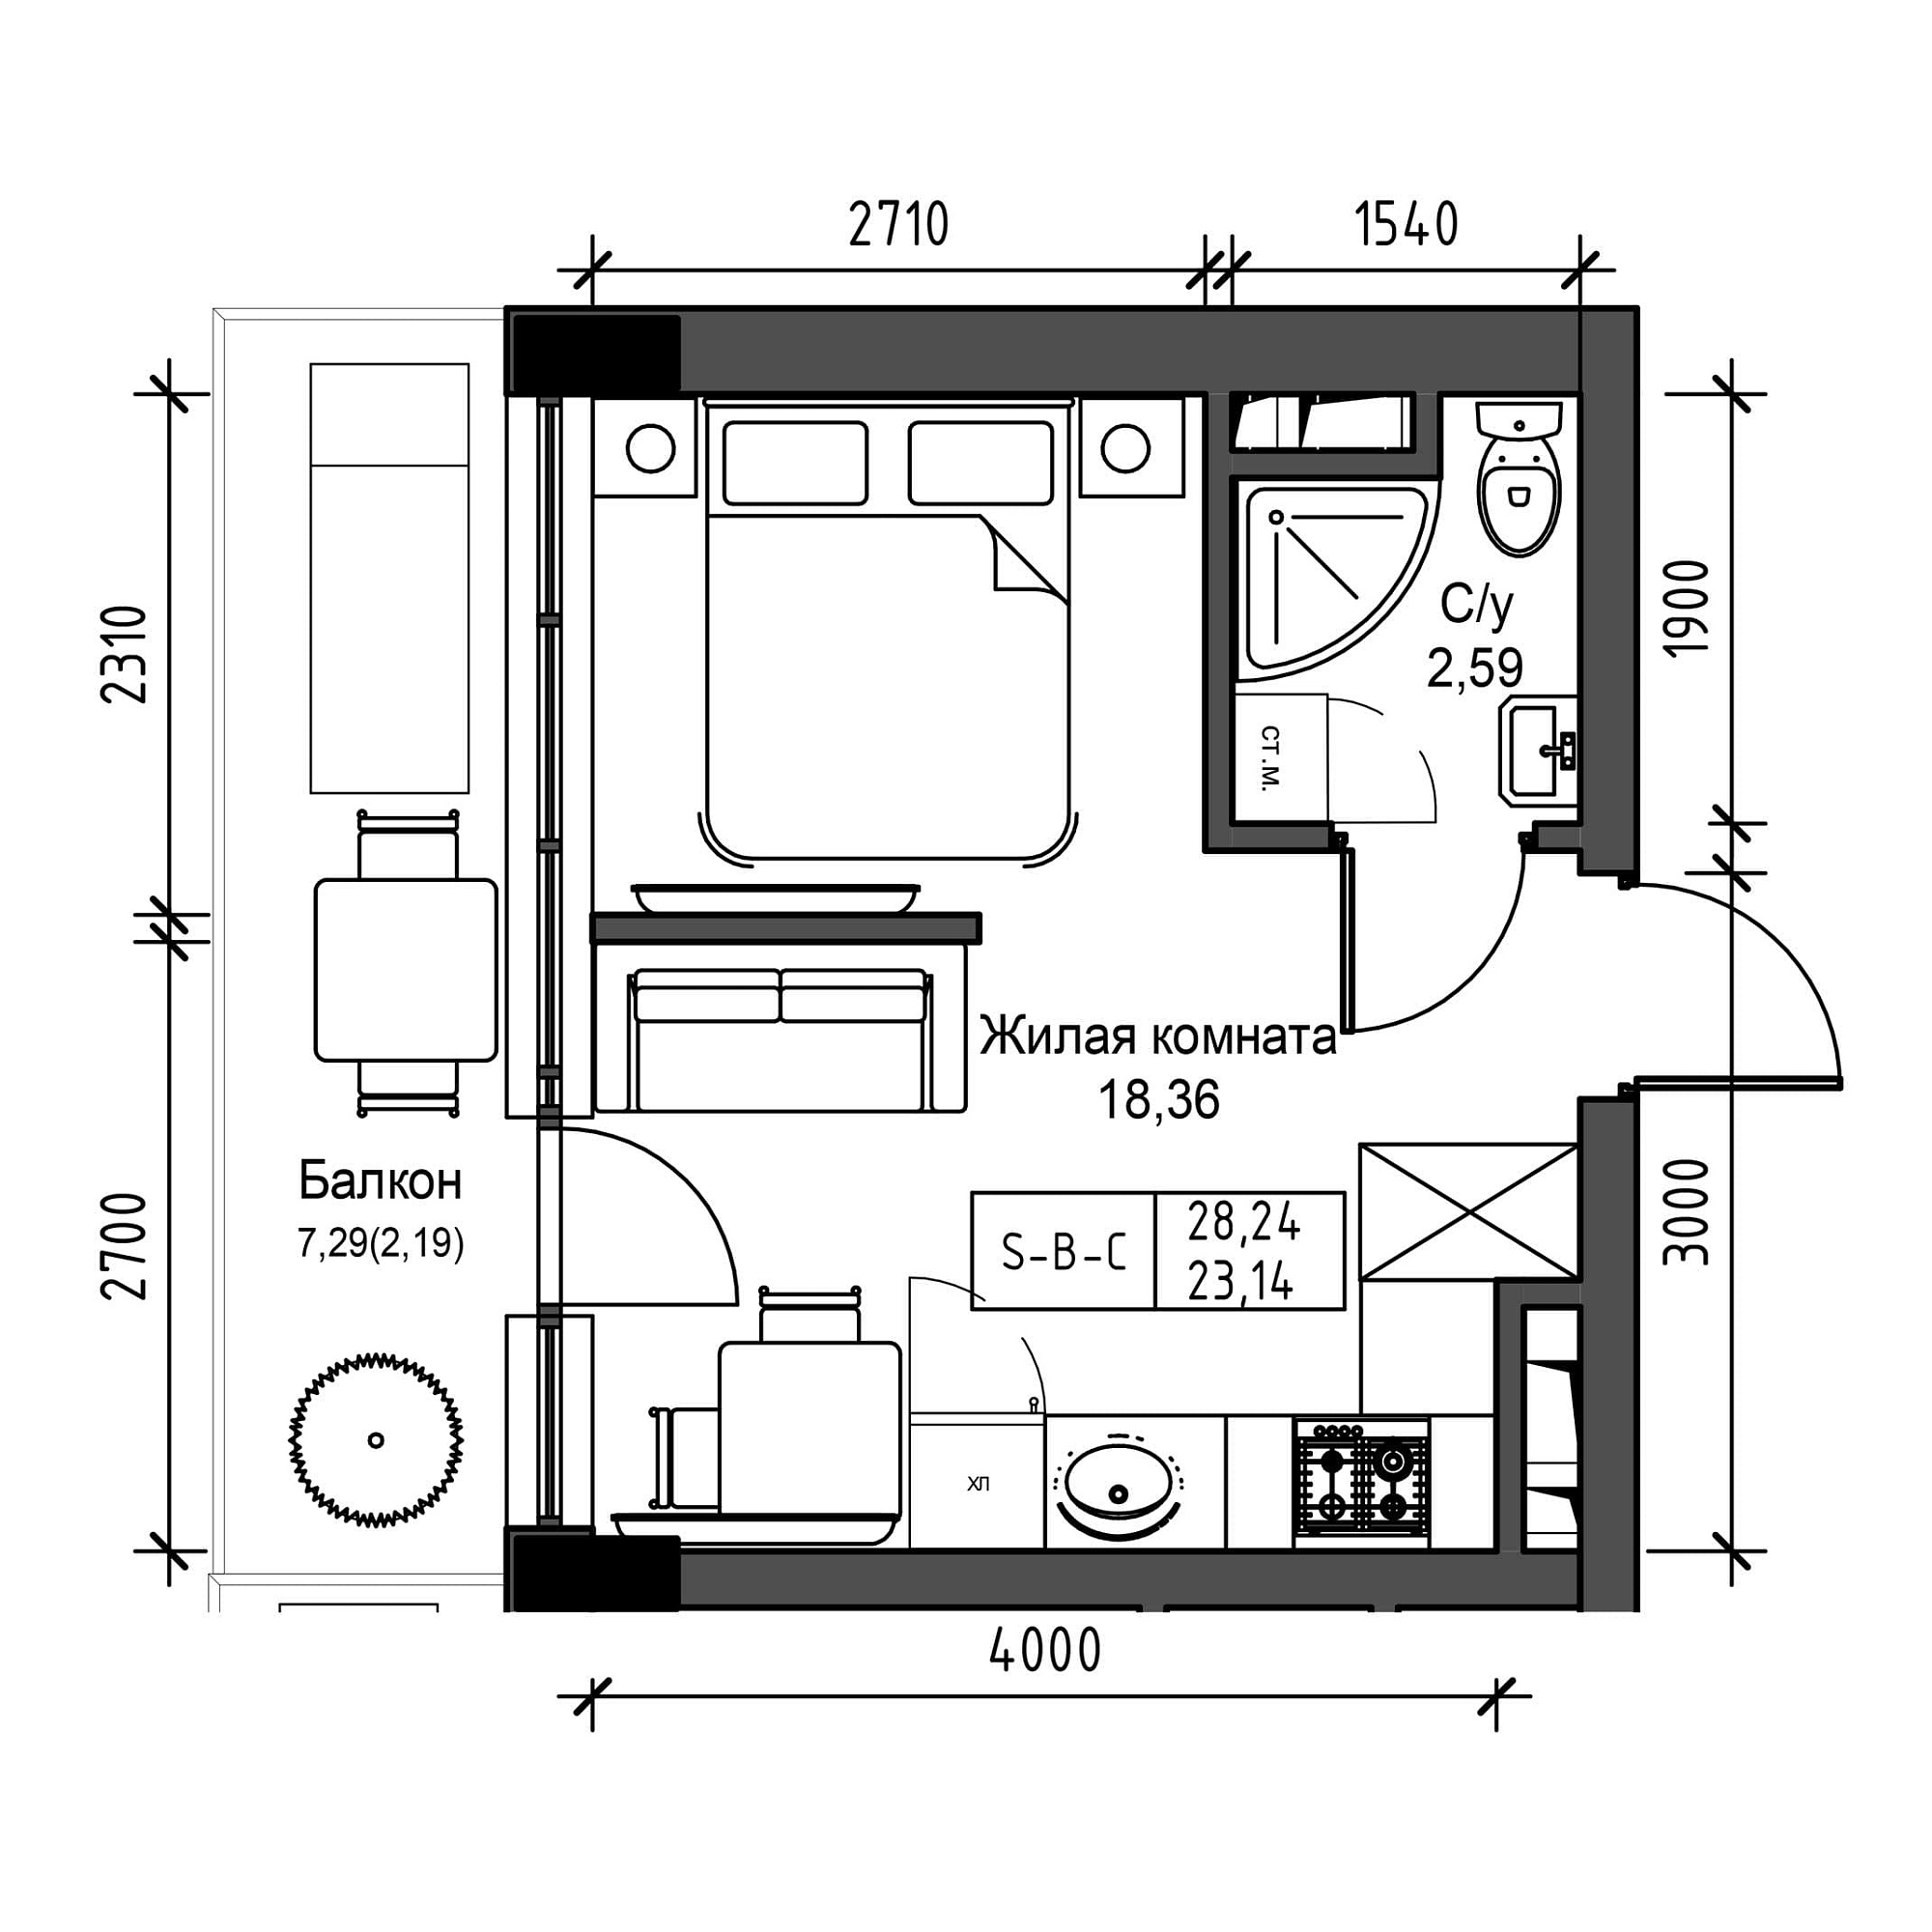 Планування Smart-квартира площею 23.14м2, UM-001-08/0013.